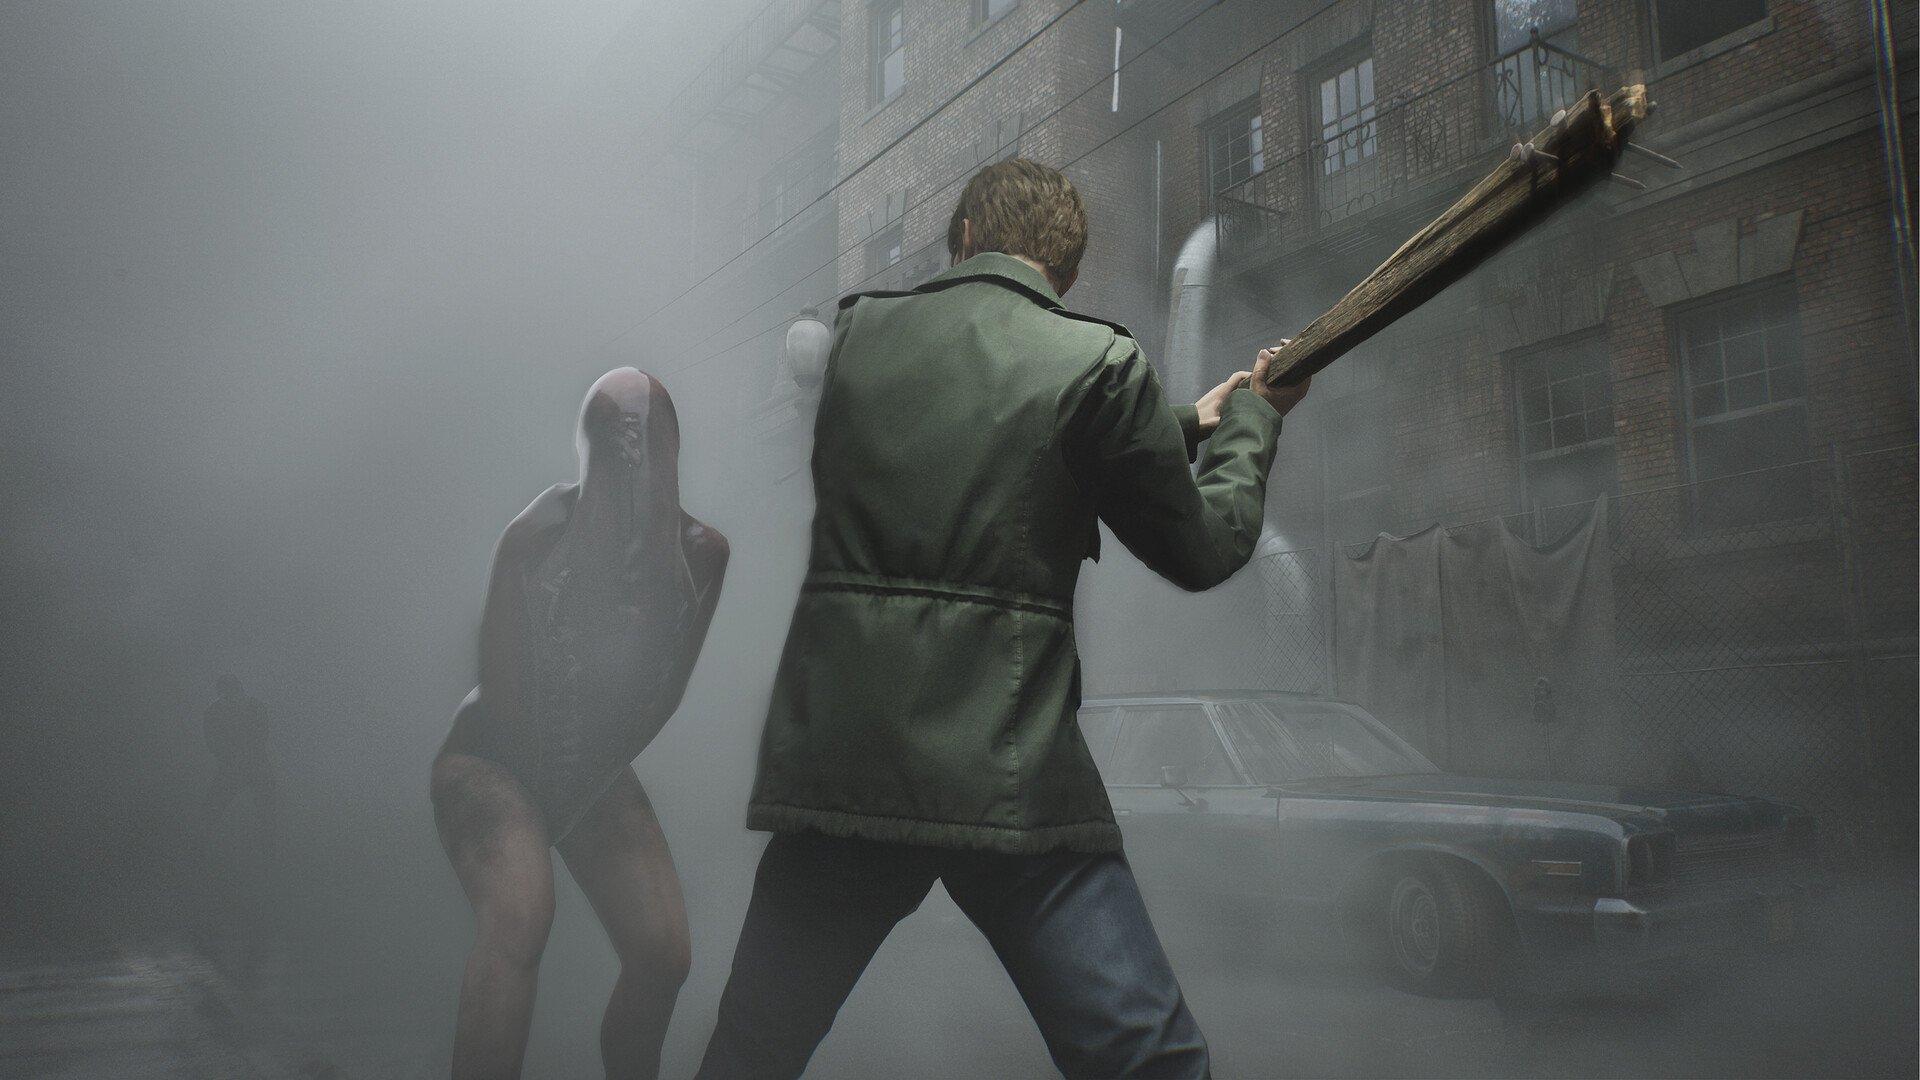 Silent Hill 2 Remake exclusivo de PS5!! #silenthill #konami